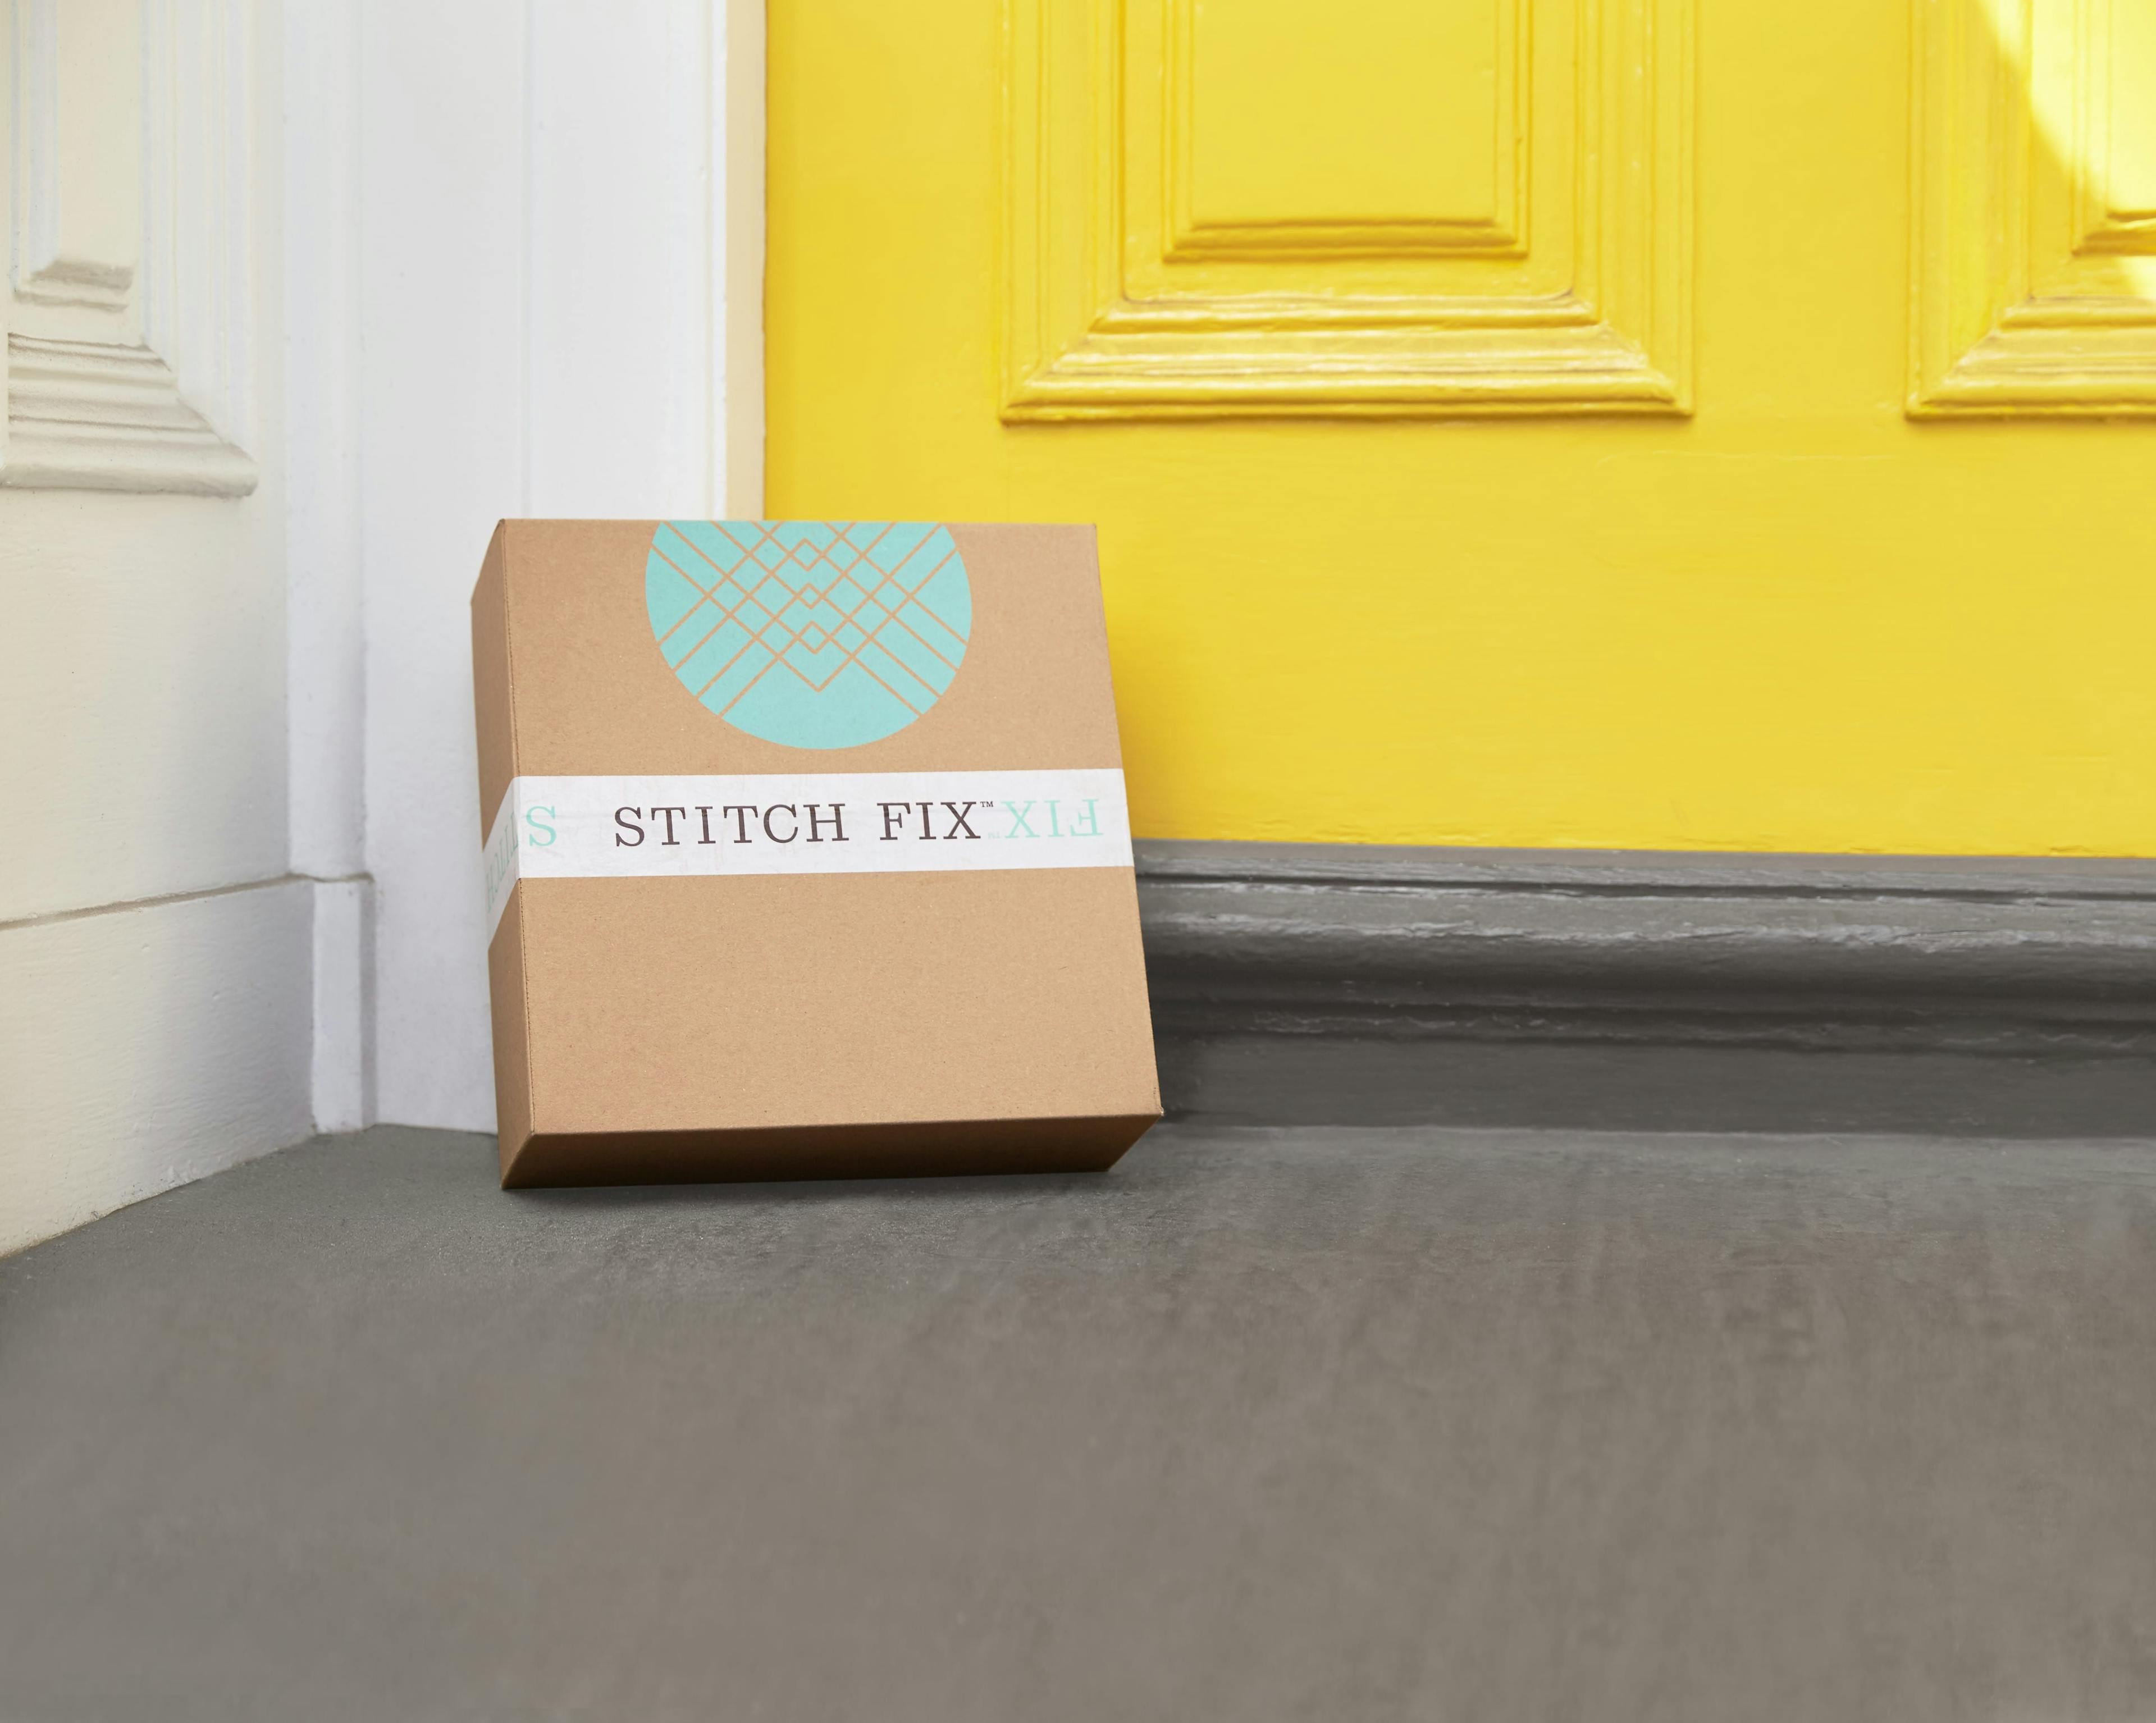 Stitch Fix Box on Doorstep